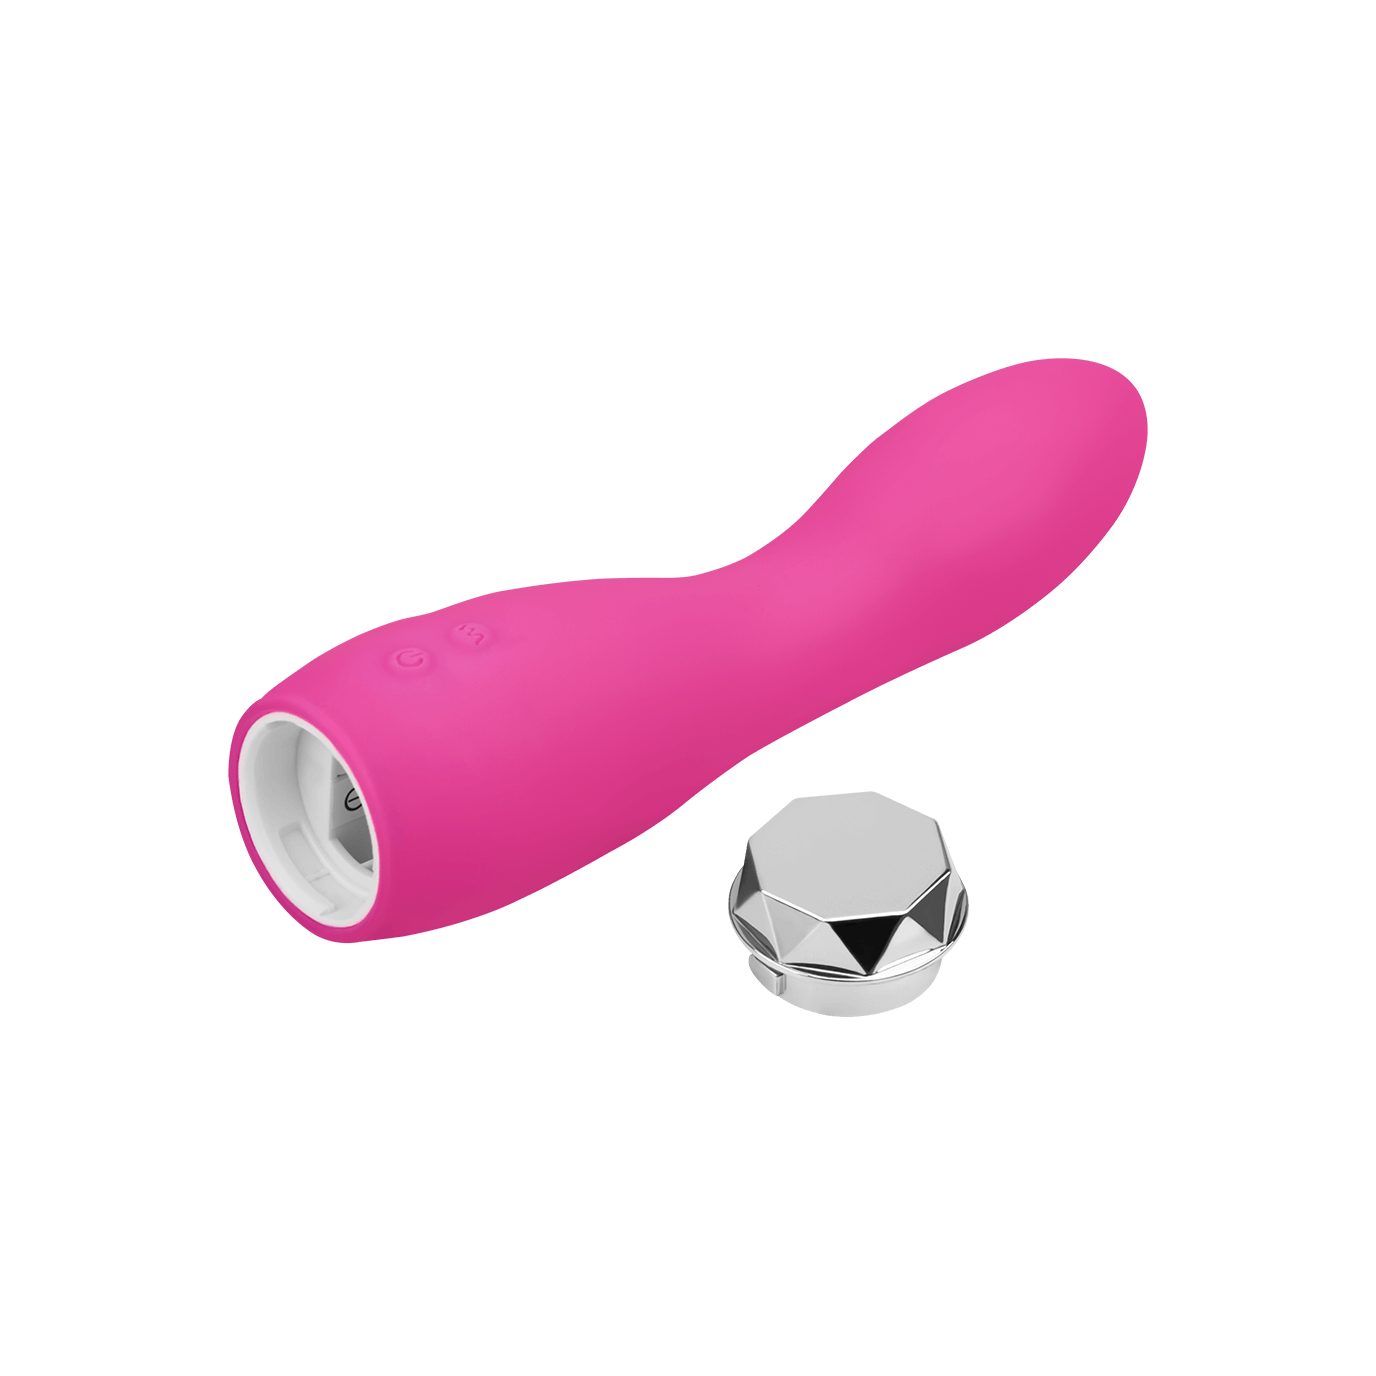 EIS wasserdicht aus Silikon, 15,5cm, G-Spot-Vibrator Klitoris-Stimulator EIS Vibrator,